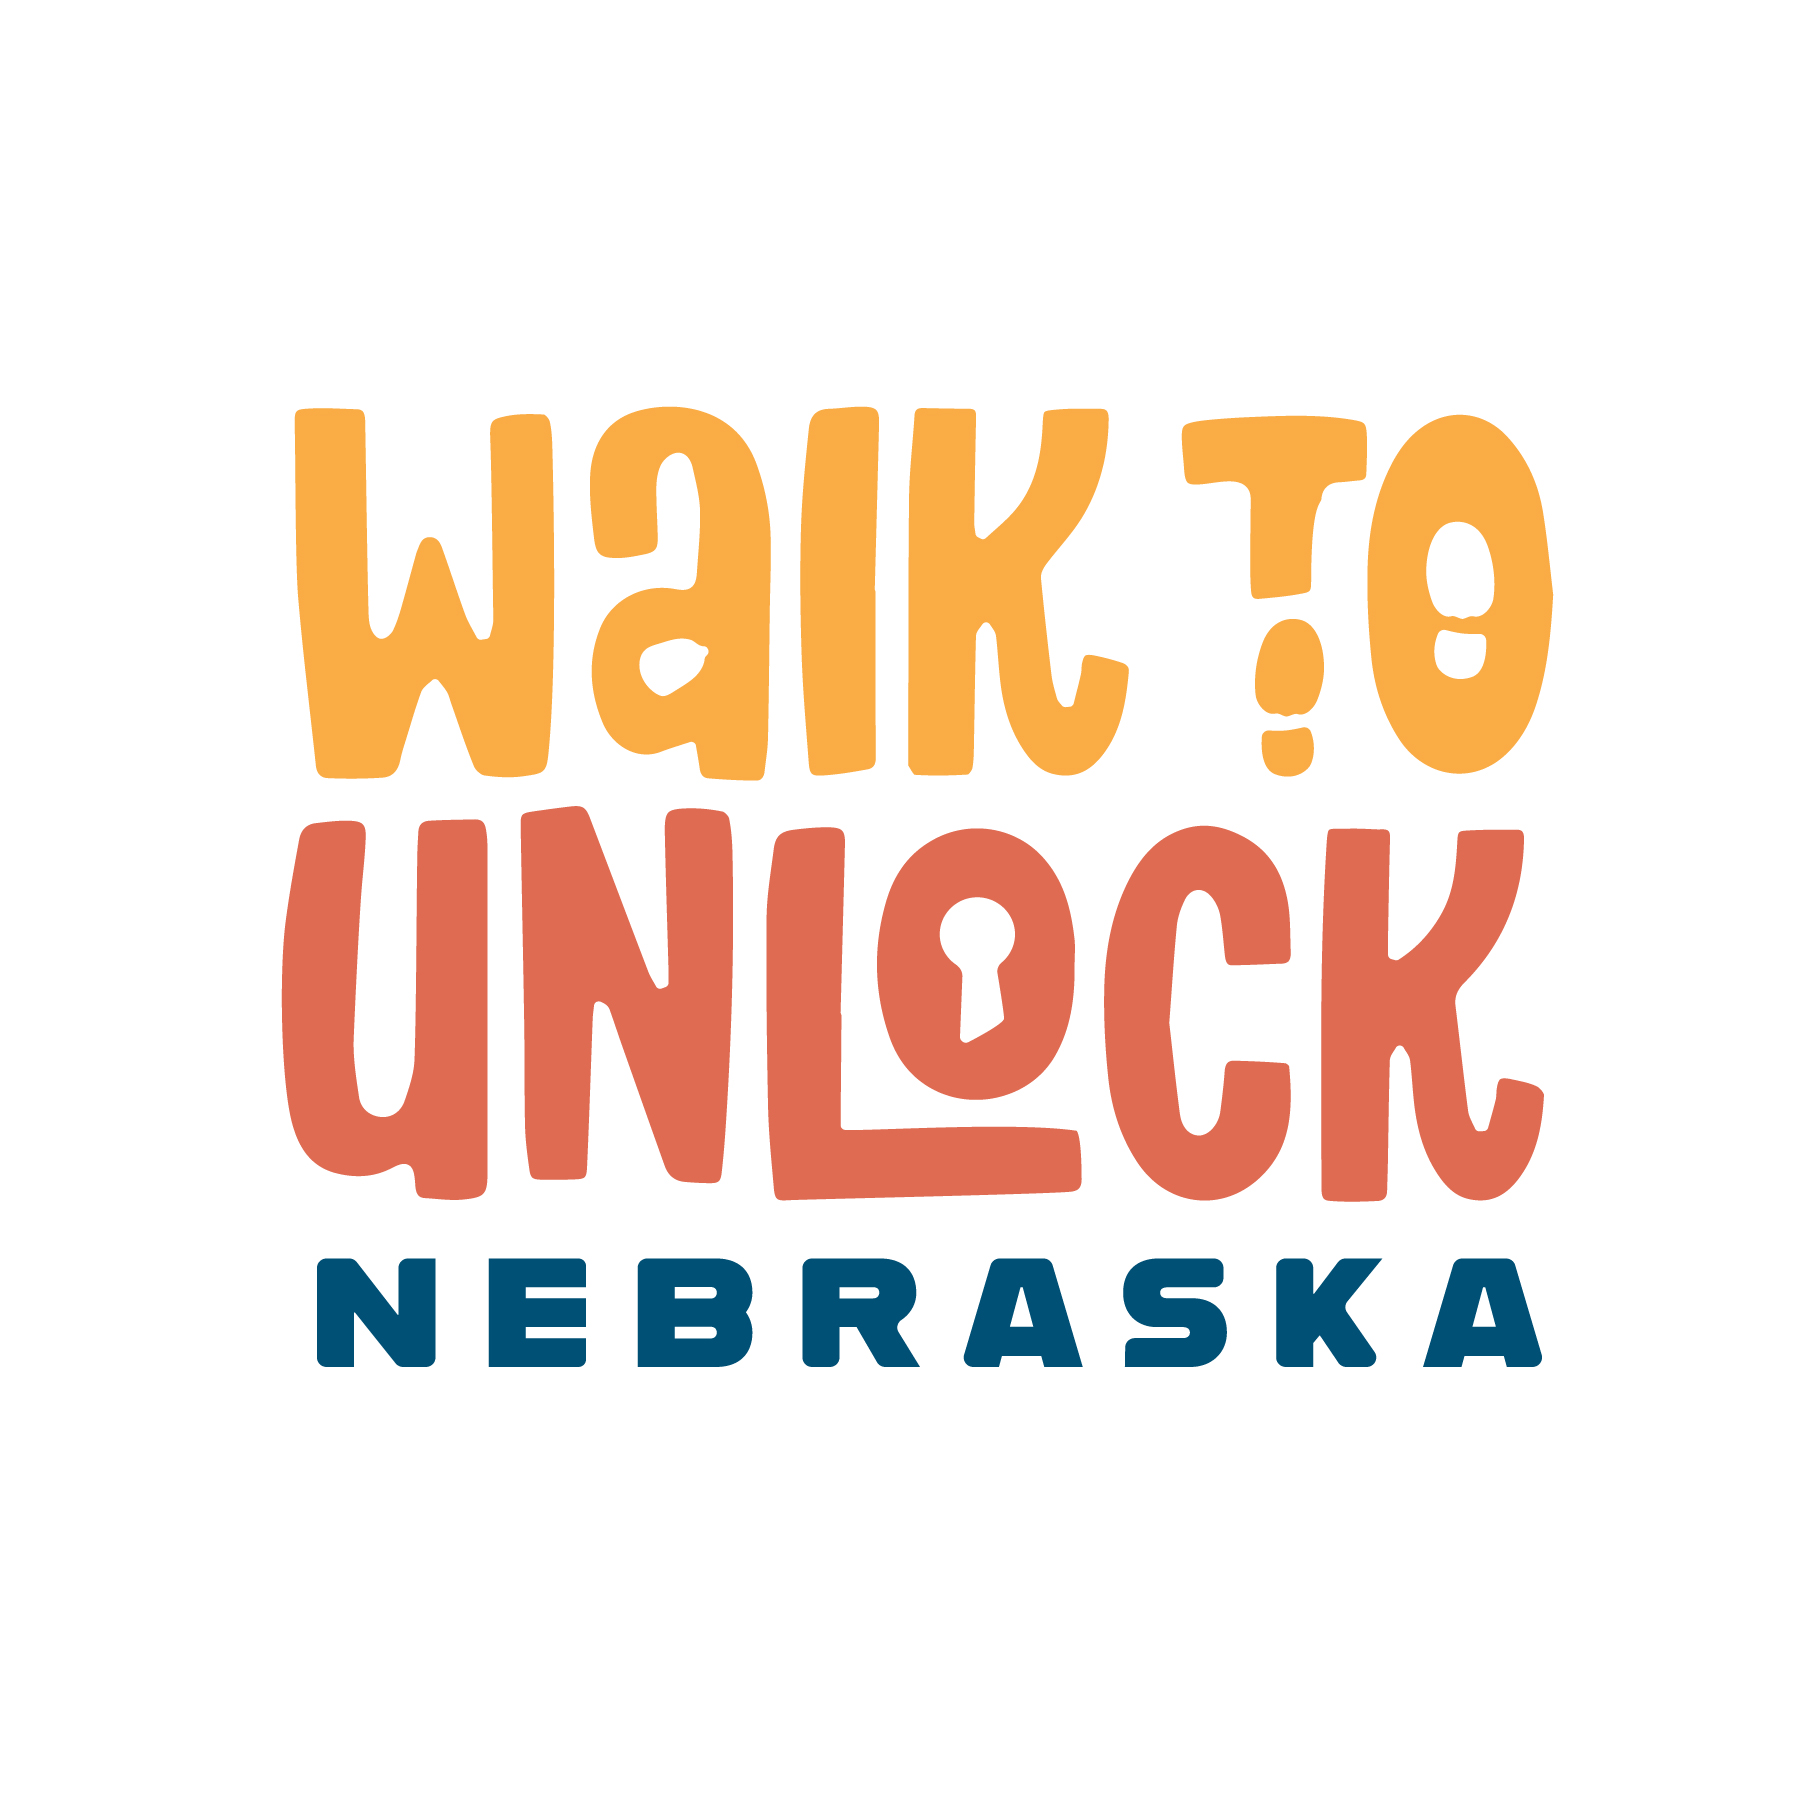 Walk to Unlock Nebraska Logo  logo design by logo designer Emspace + Lovgren for your inspiration and for the worlds largest logo competition